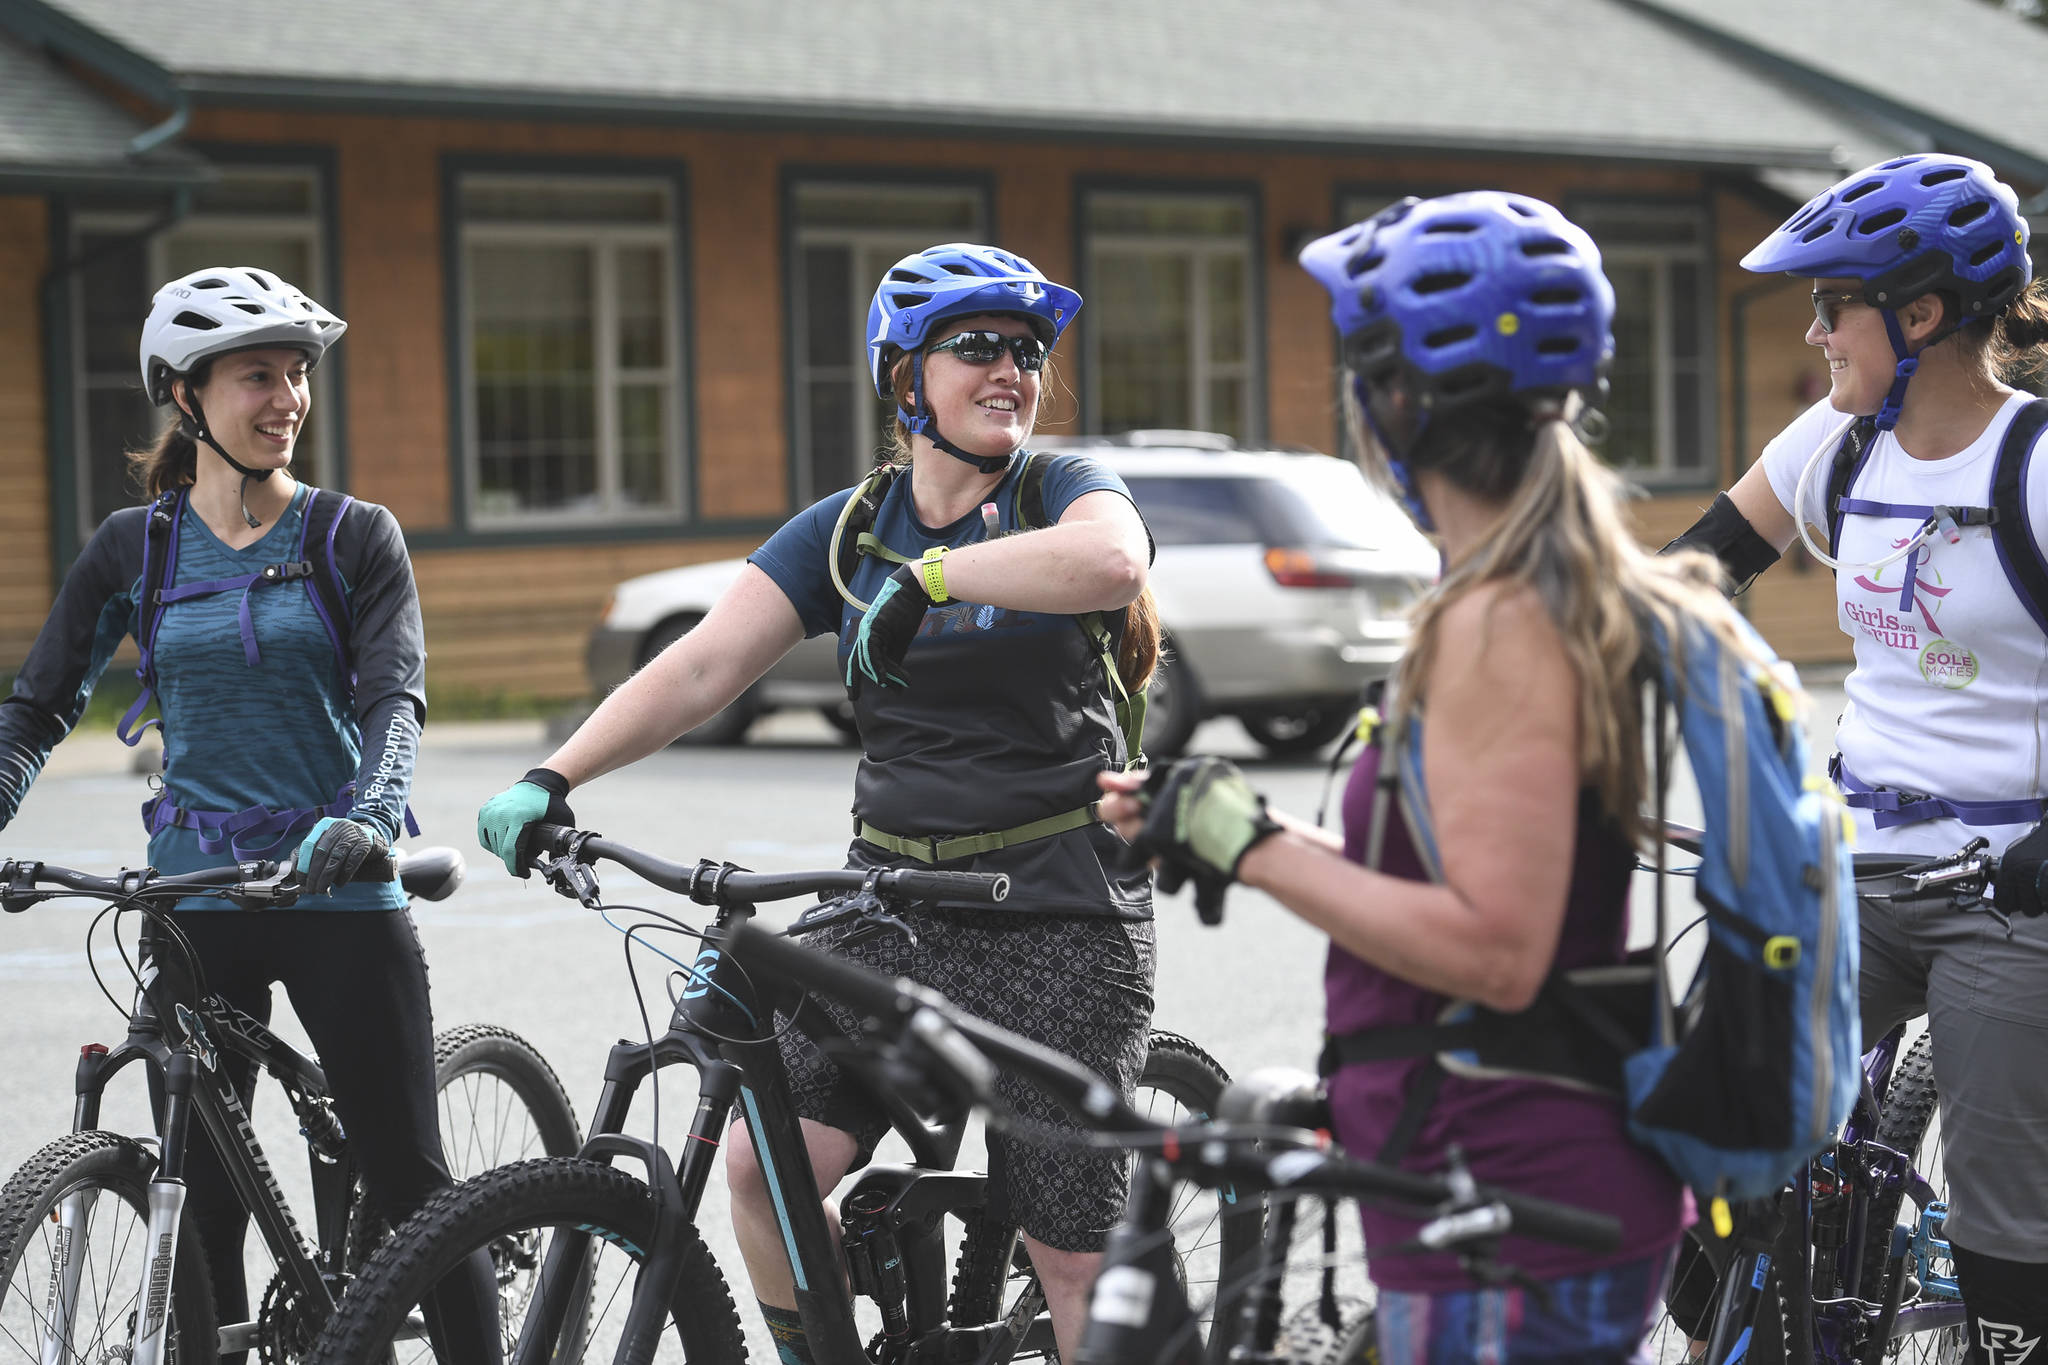 Blazing new trails: Ladies bind together for mountain biking adventures